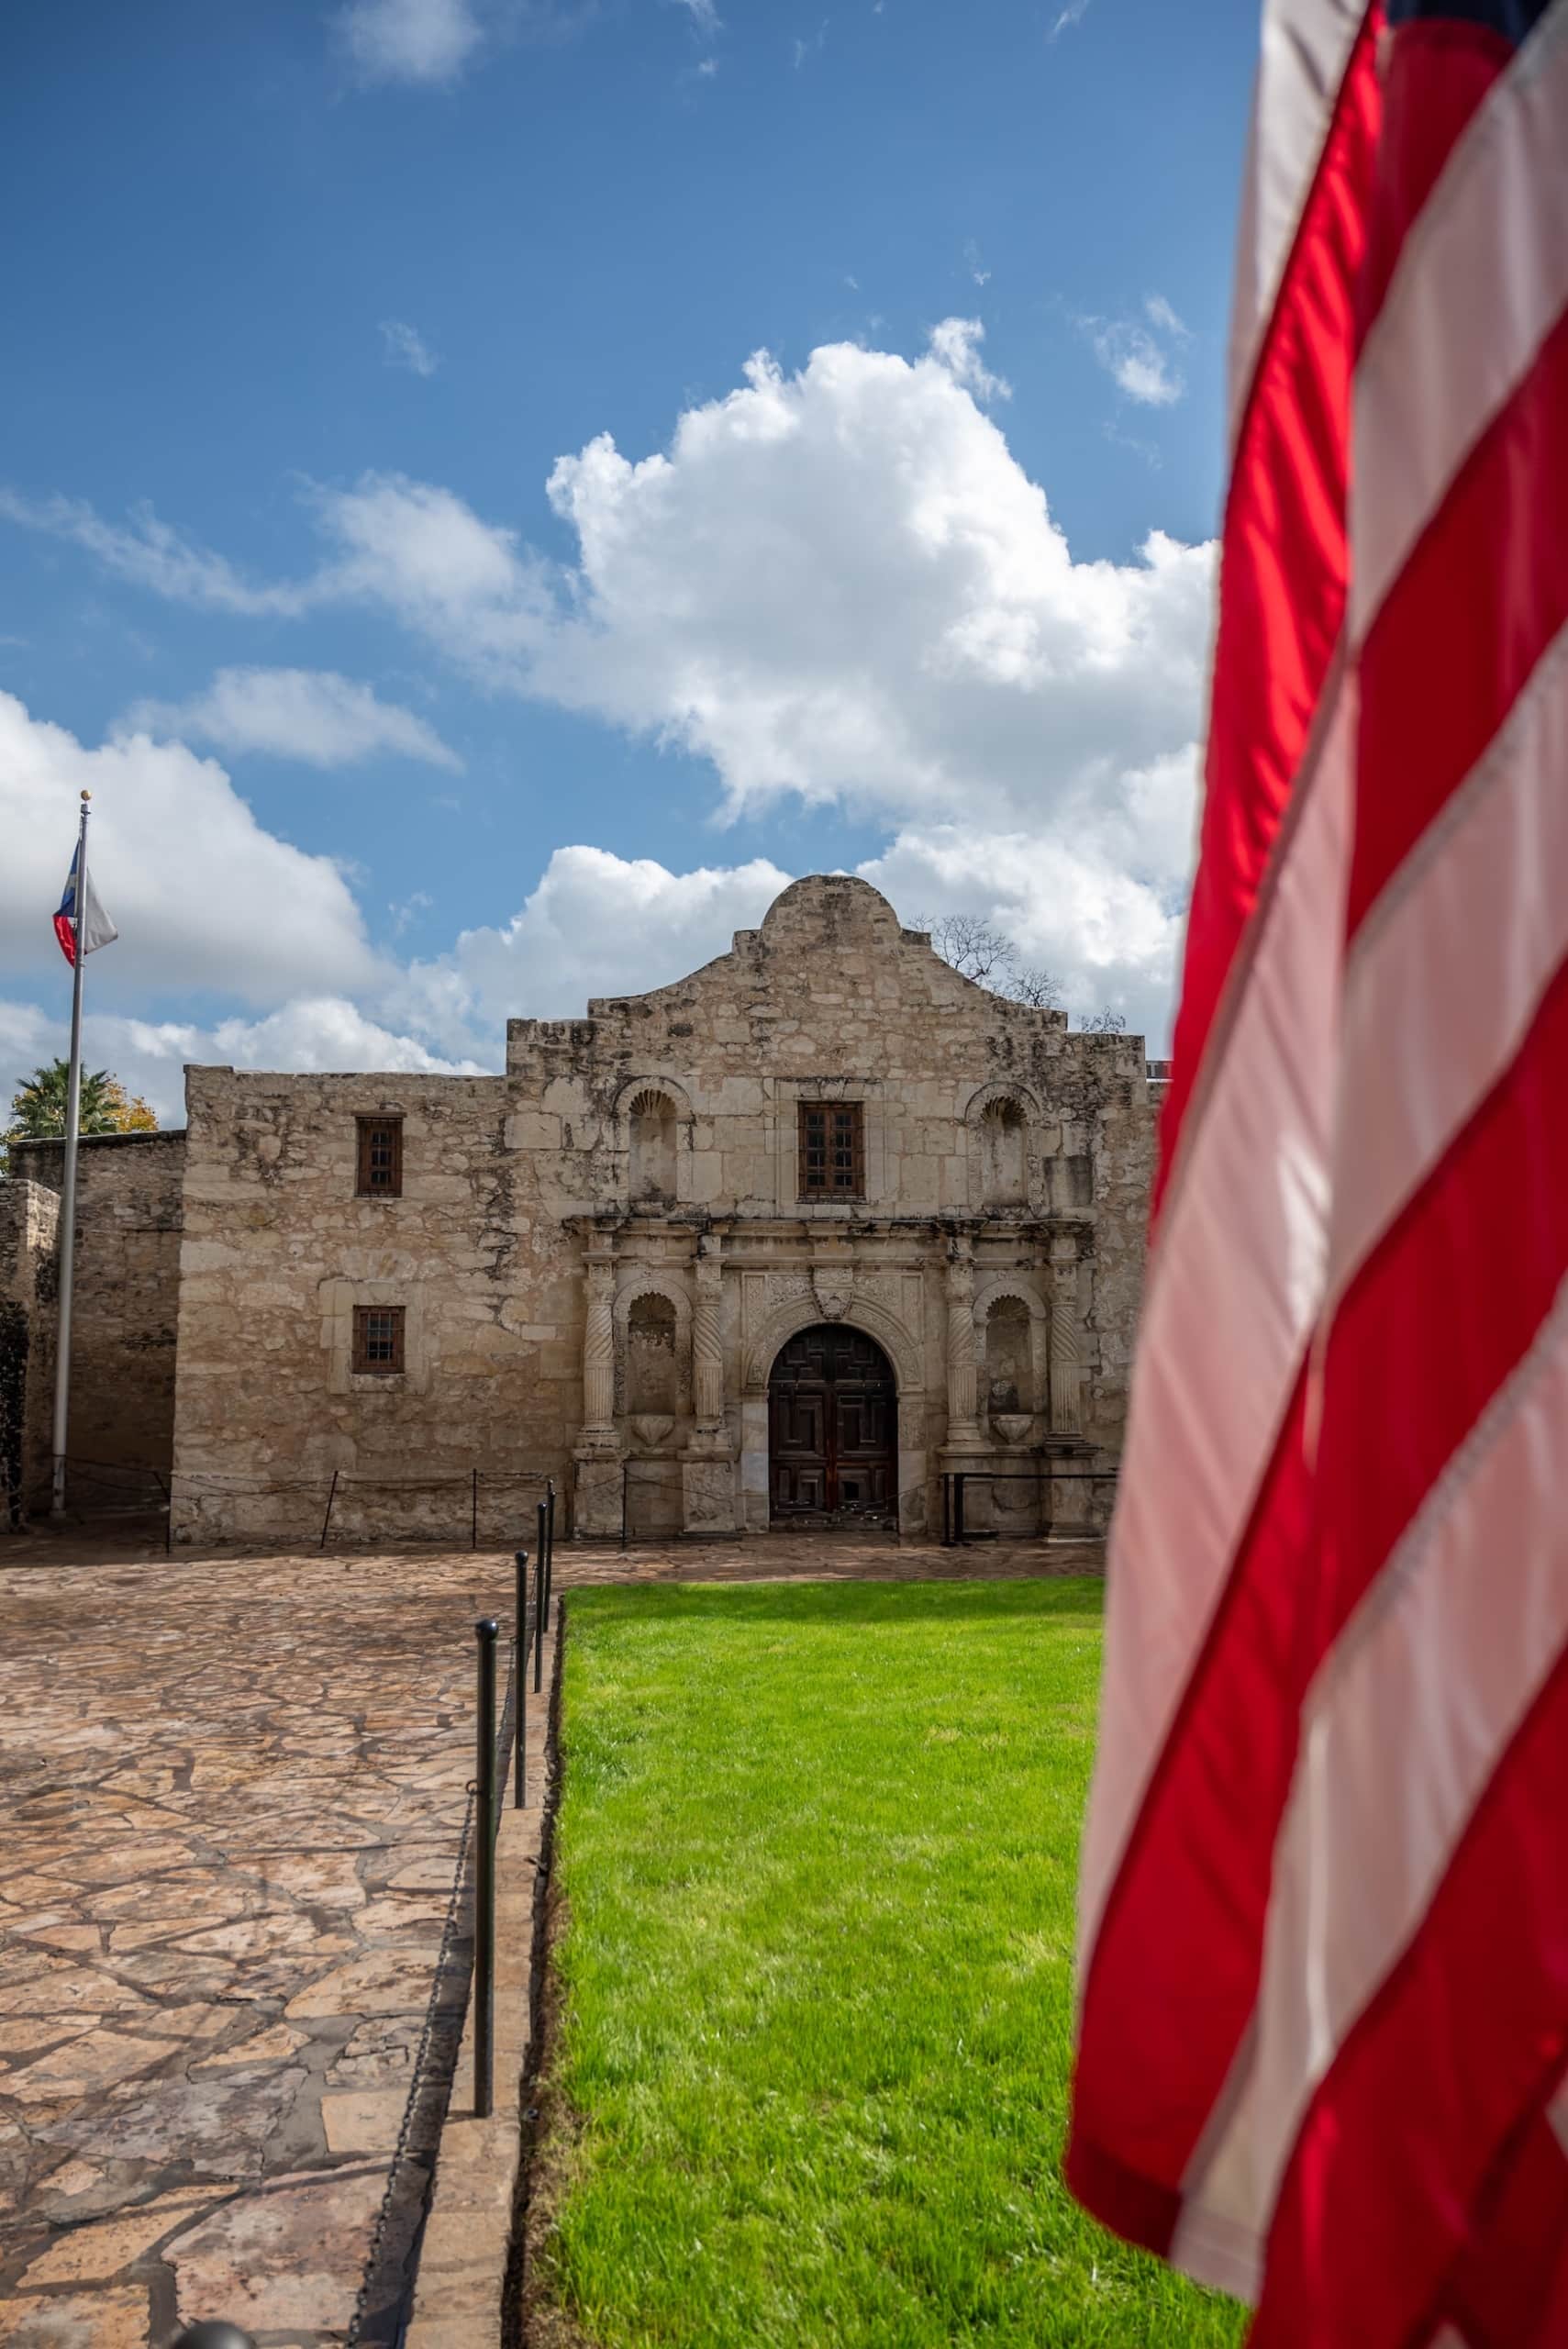 The Alamo in San Antonio in Texas